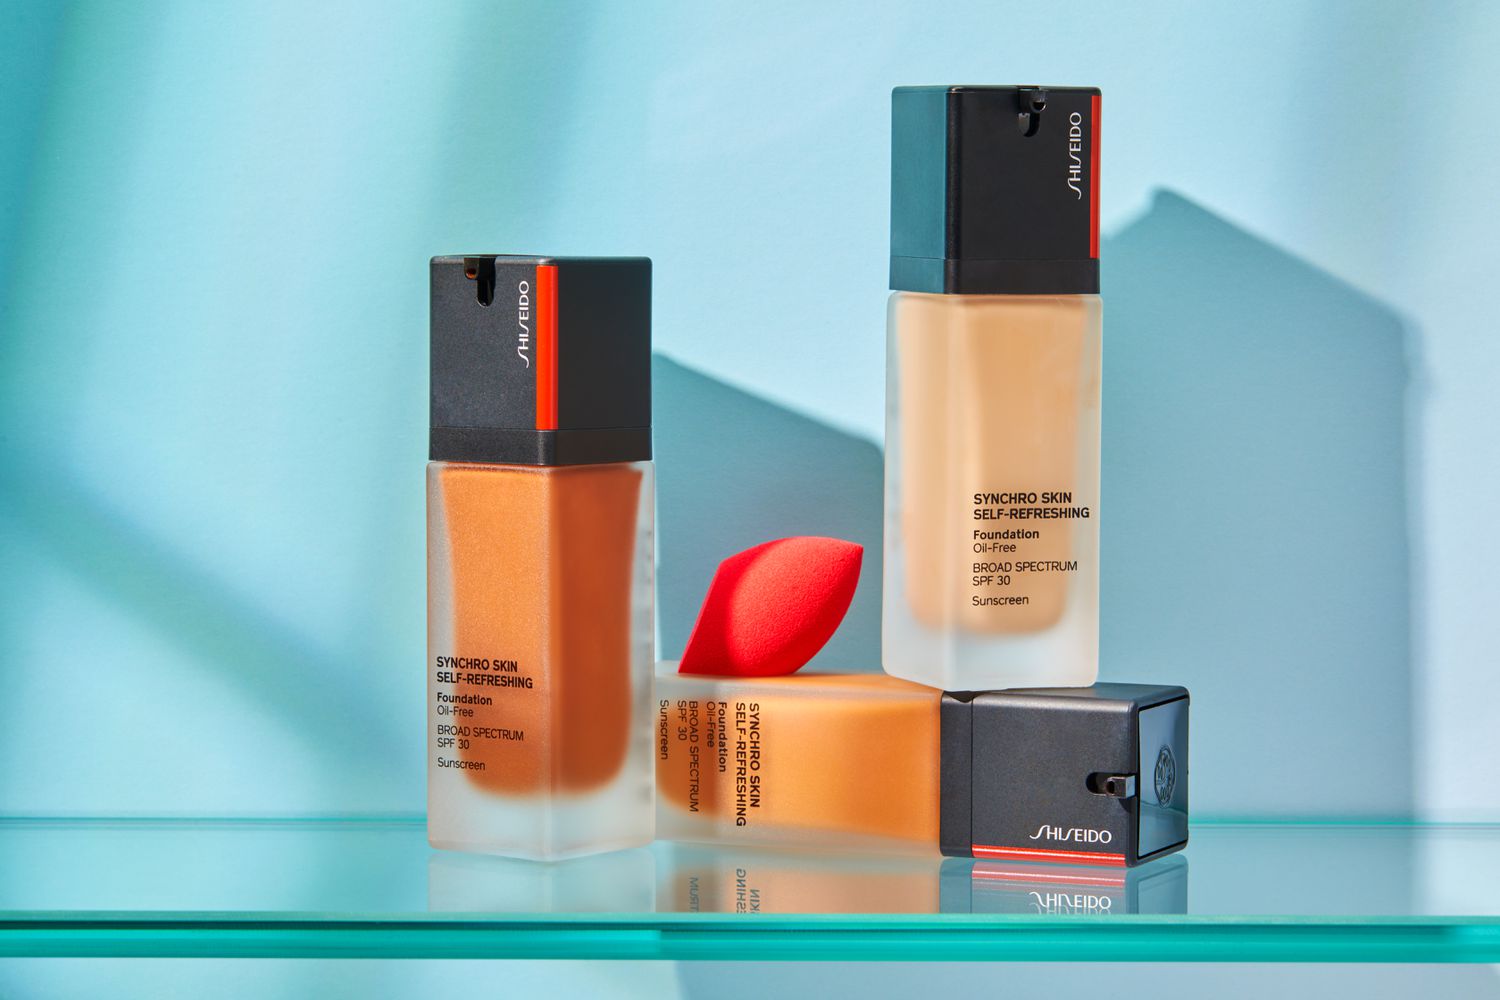 three shades of Shiseido Synchro Skin Self-Refreshing Foundation and makeup sponge on glass shelf